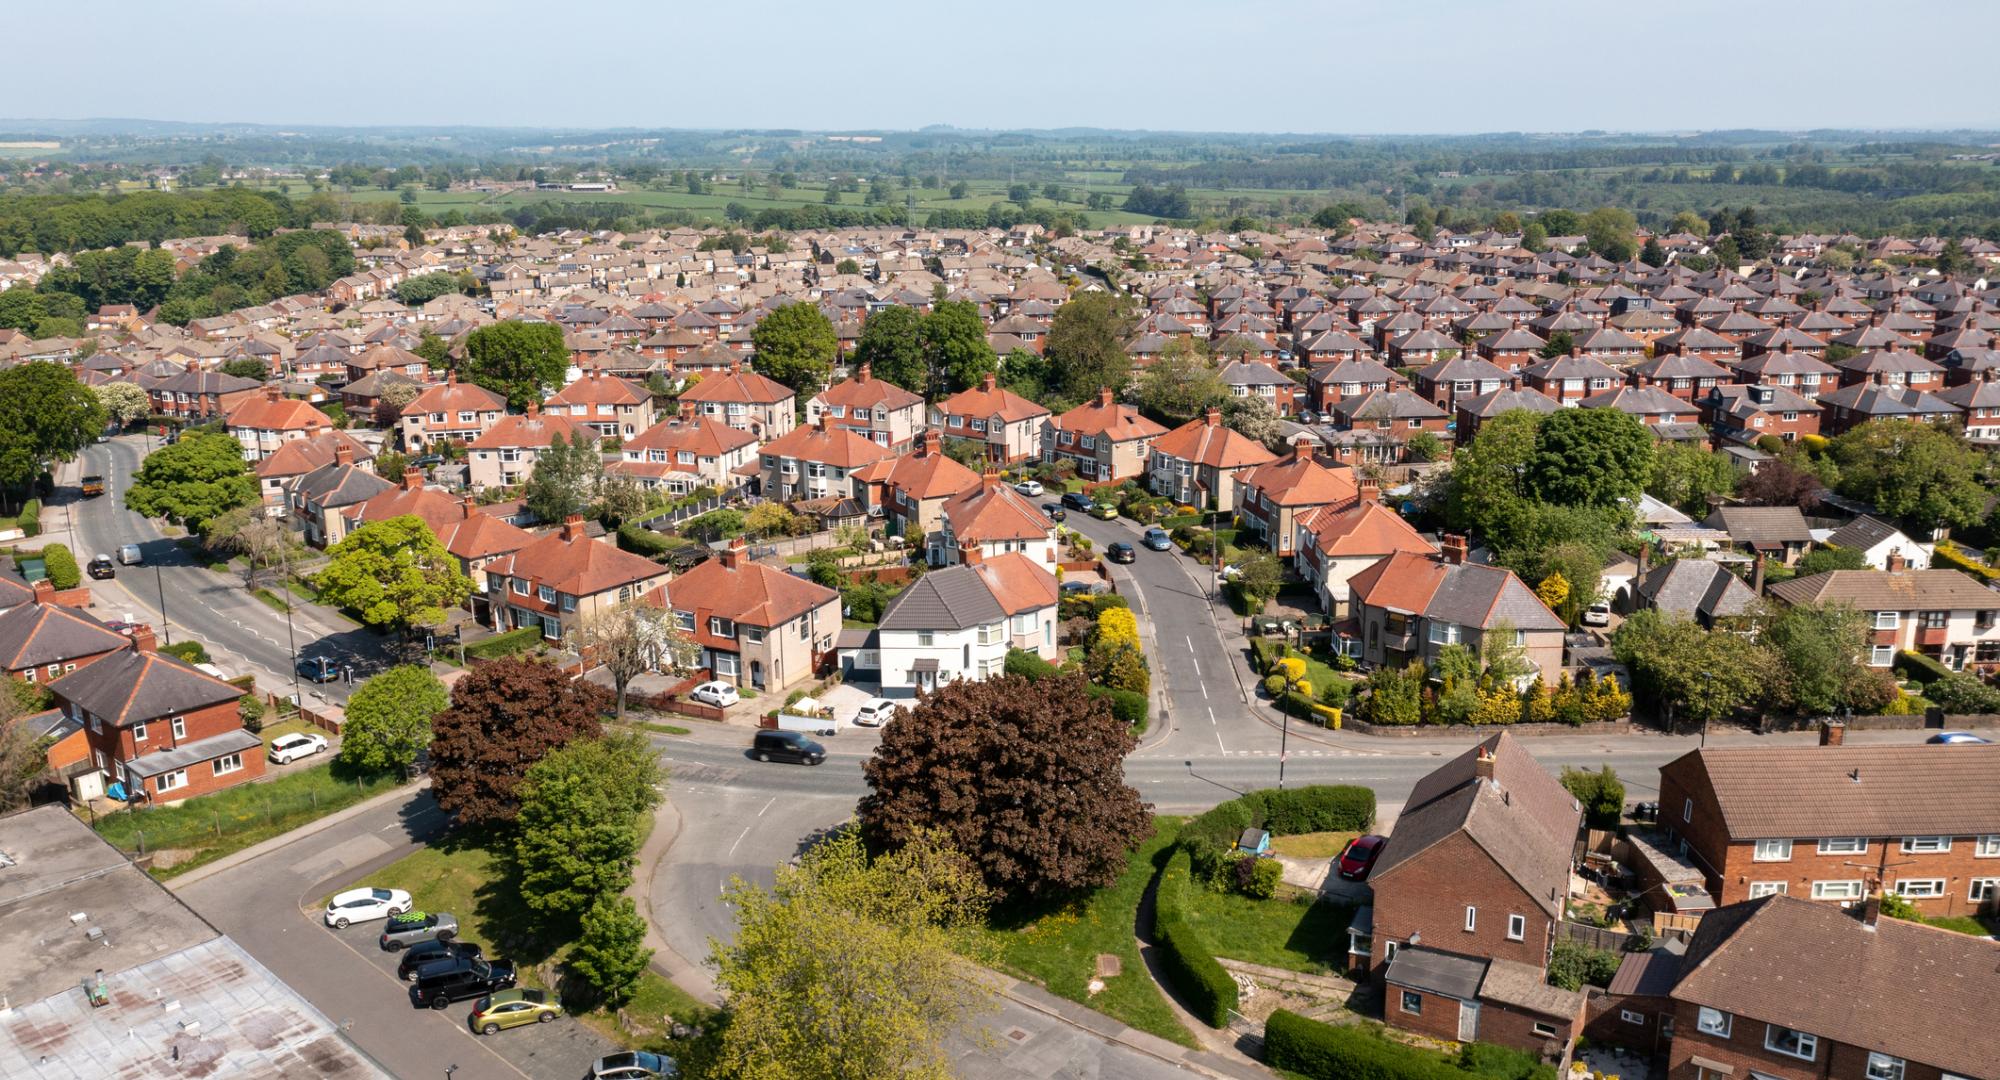 Aerial view of a housing estate in Harrogate